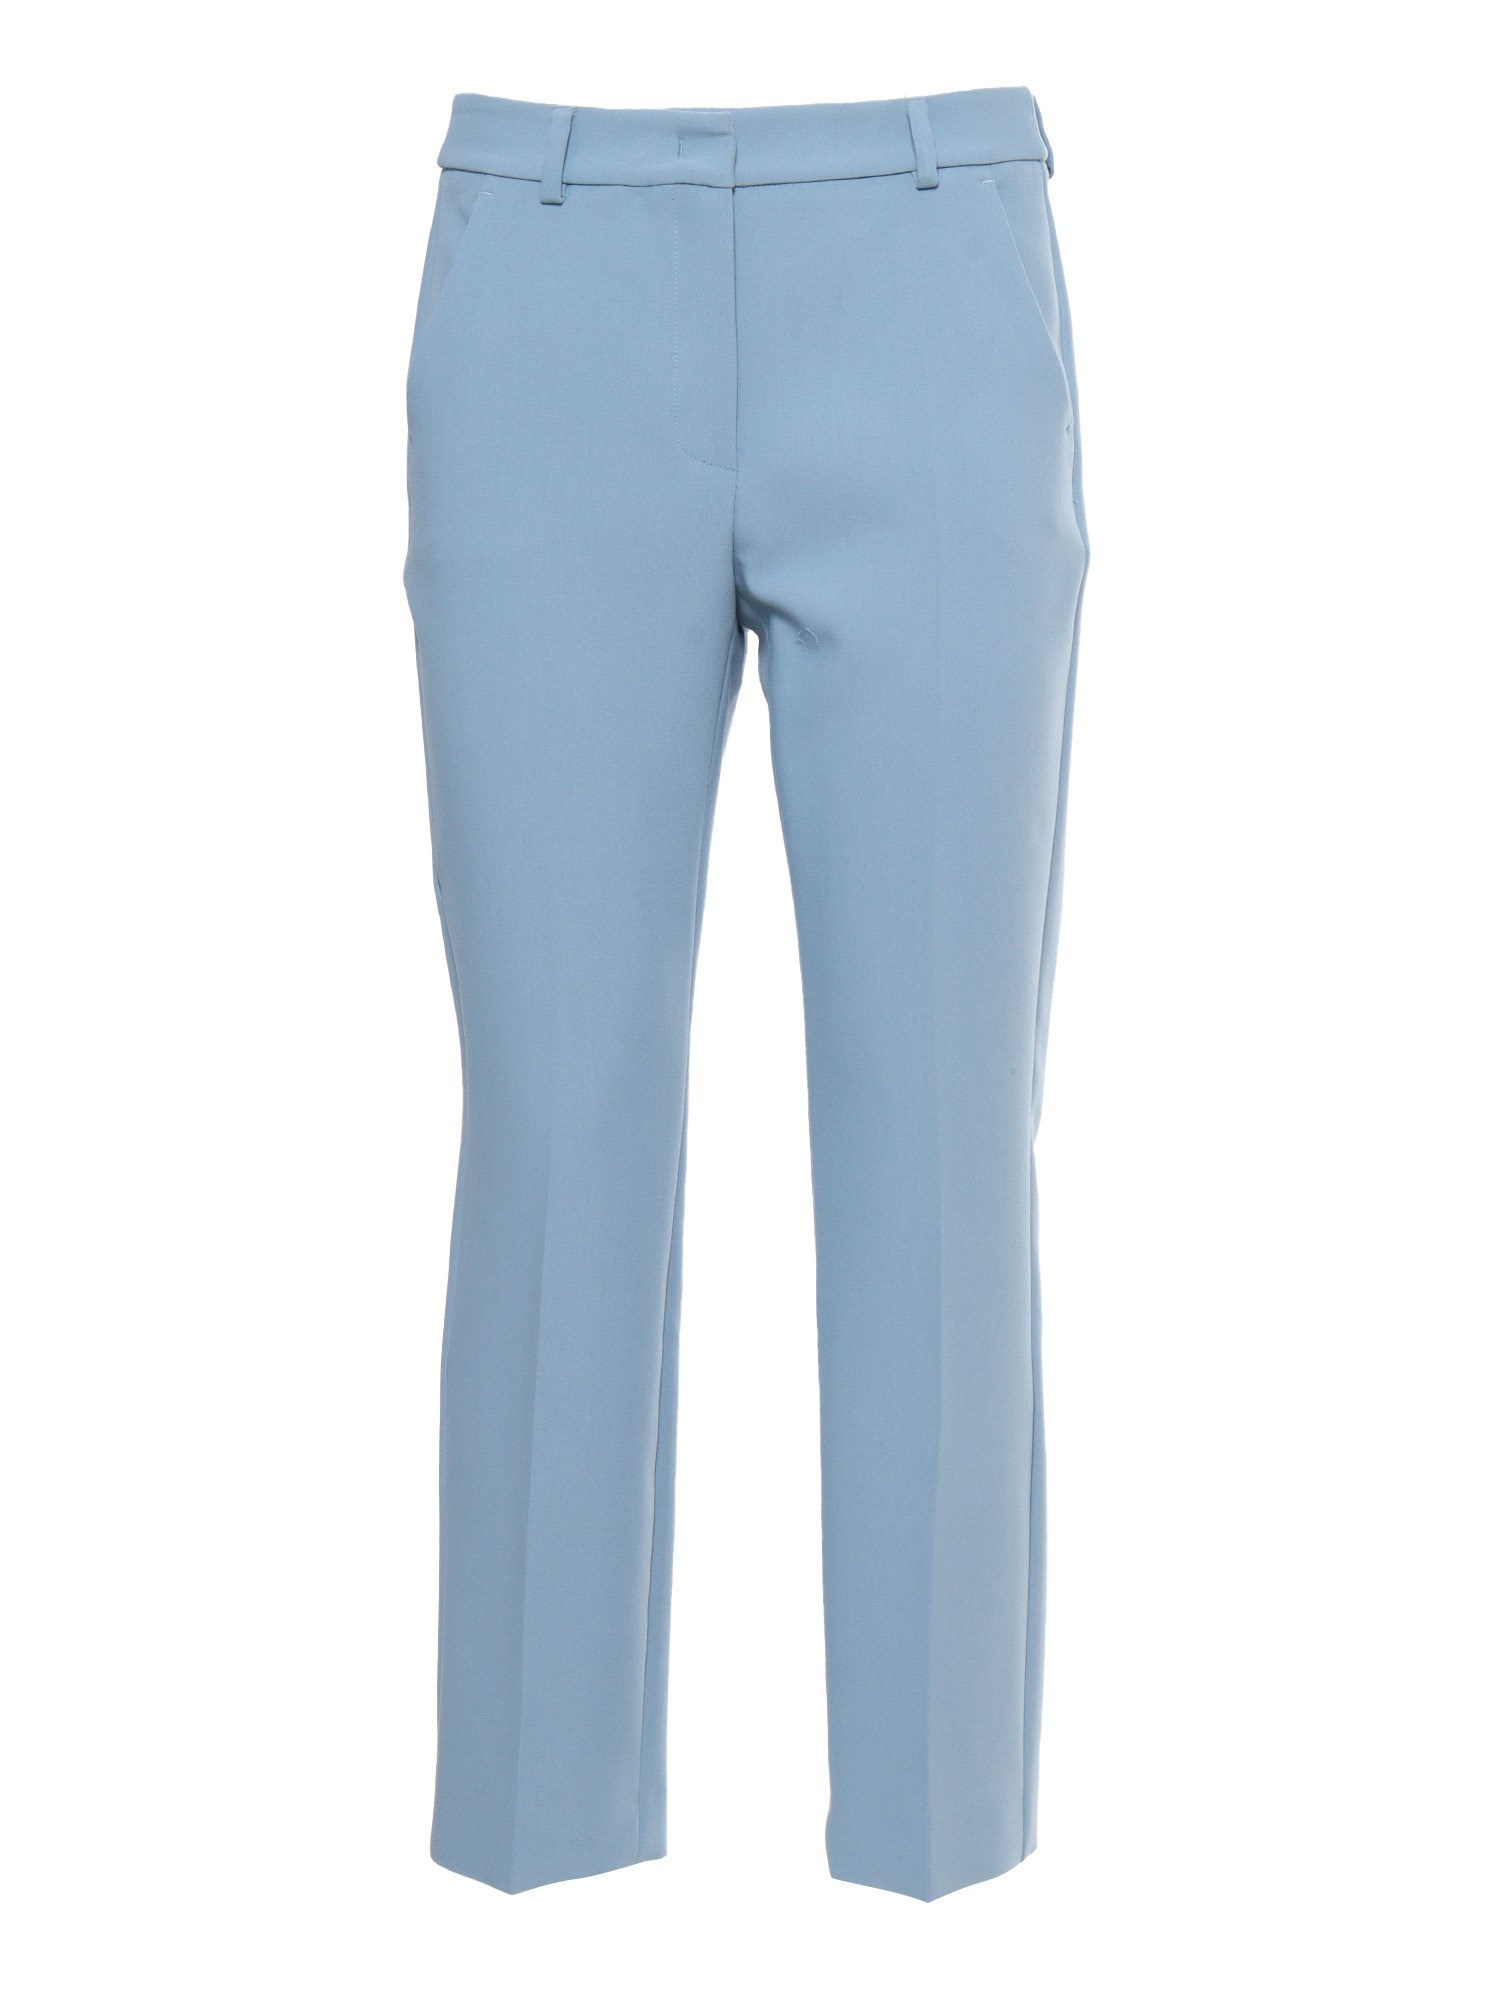 Max Mara Light Blue Trousers